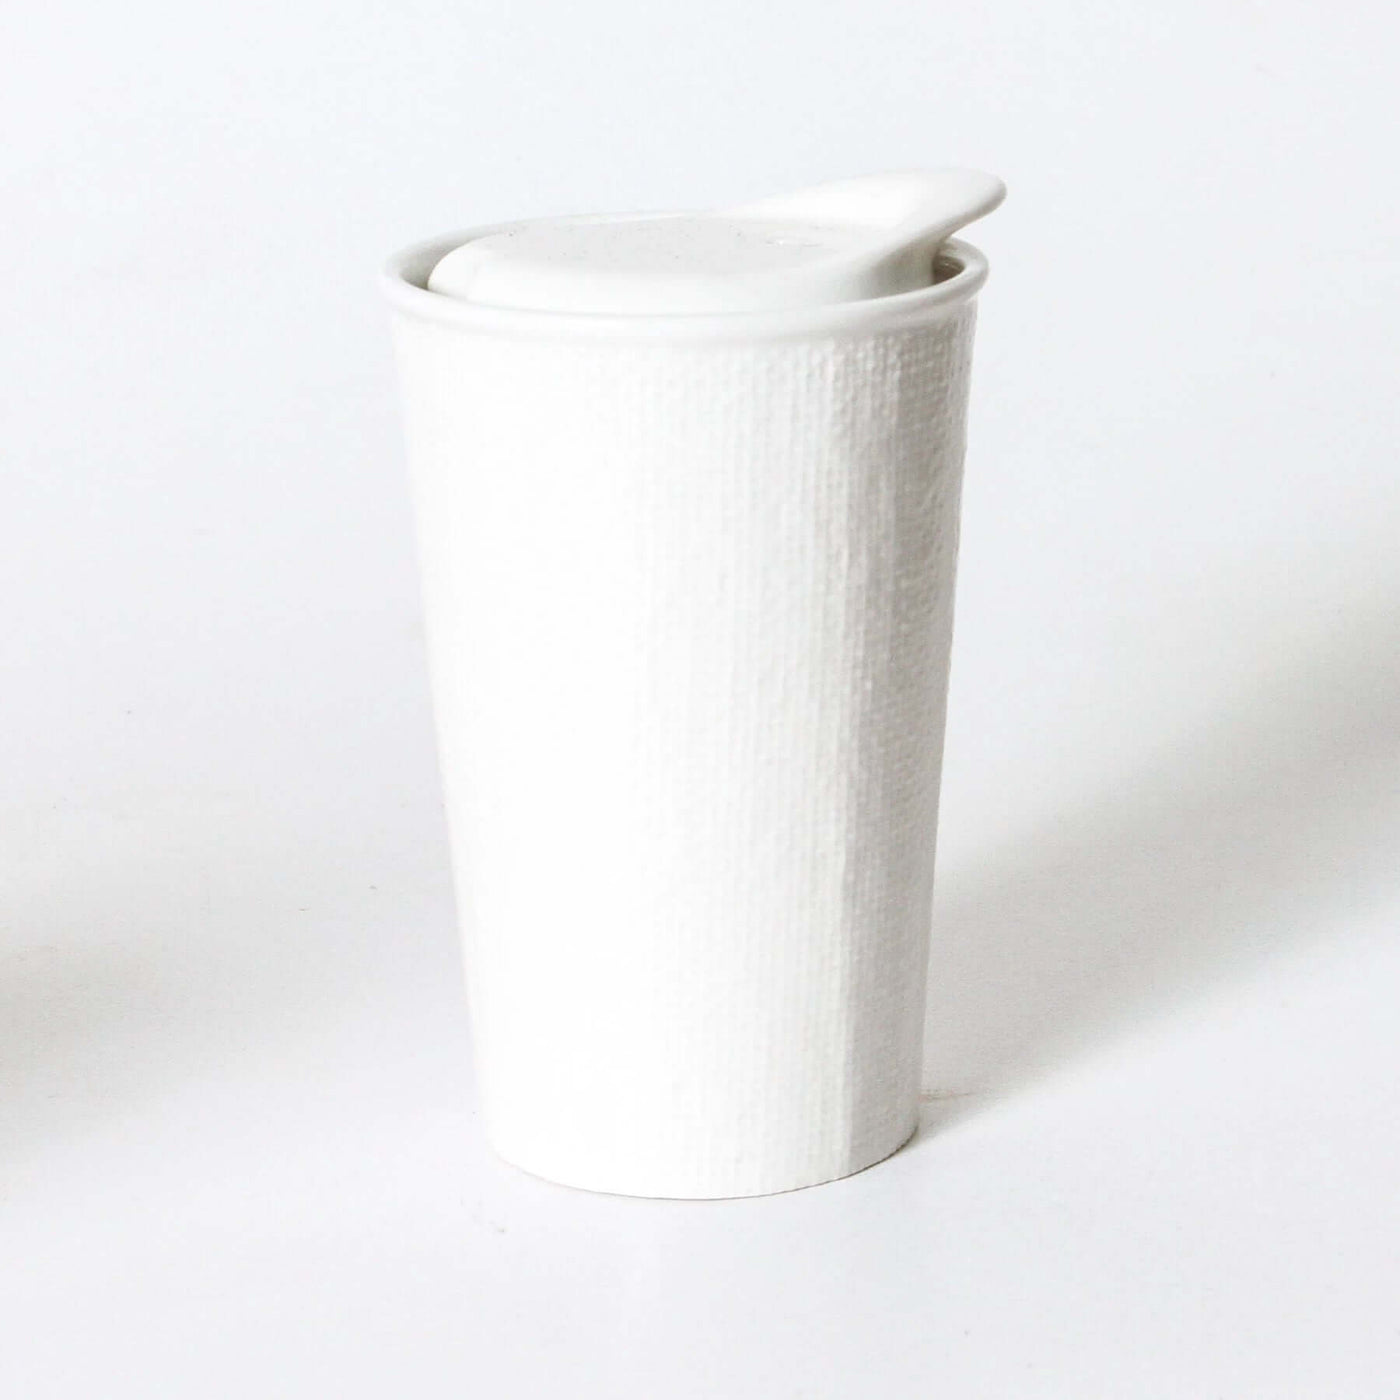 It's A Keeper Ceramic Cup